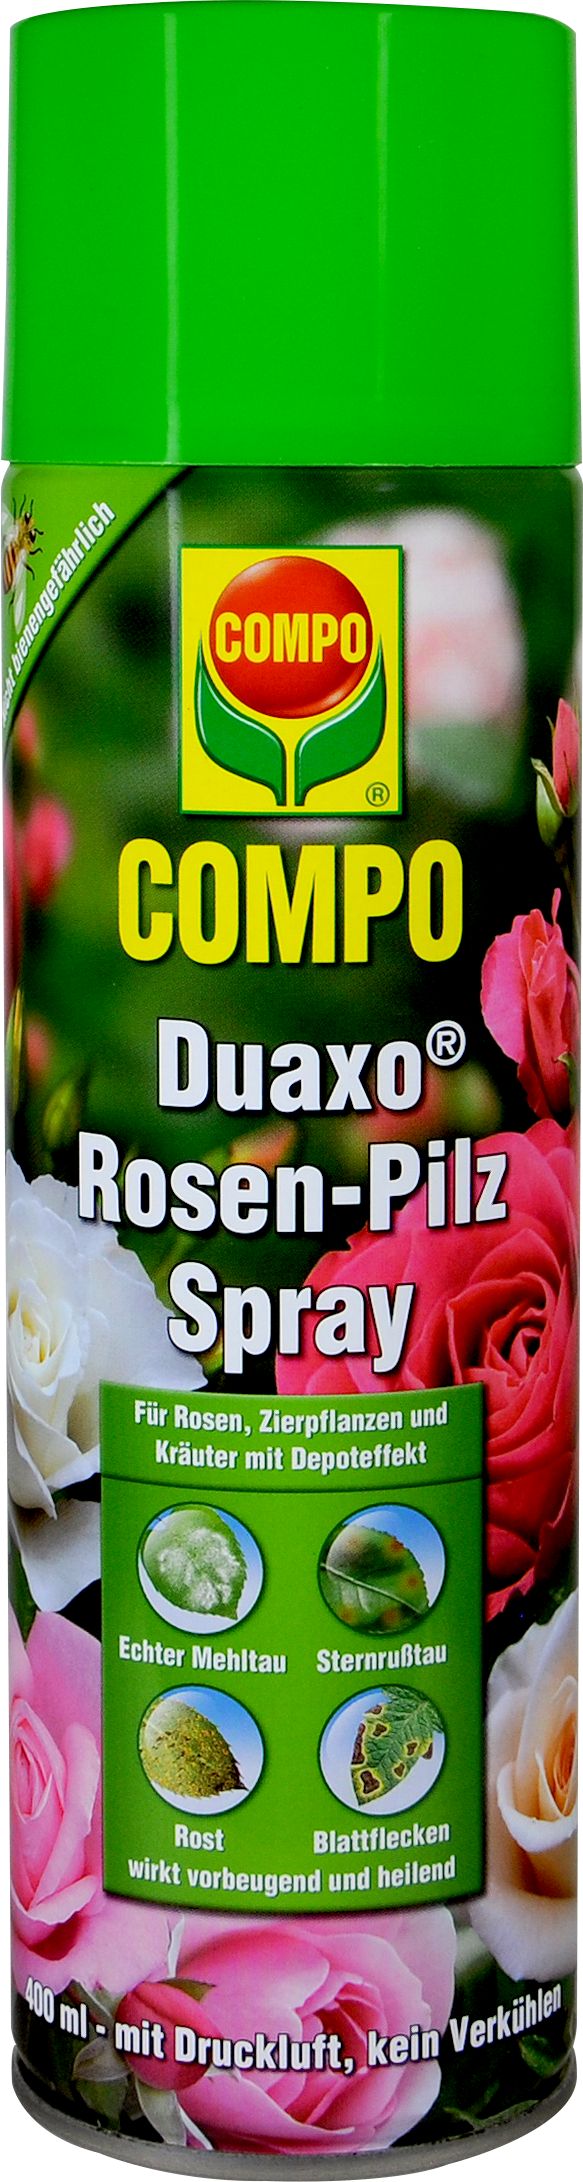 Compo Duaxo Rosen-Pilz-Spray - 400 ml